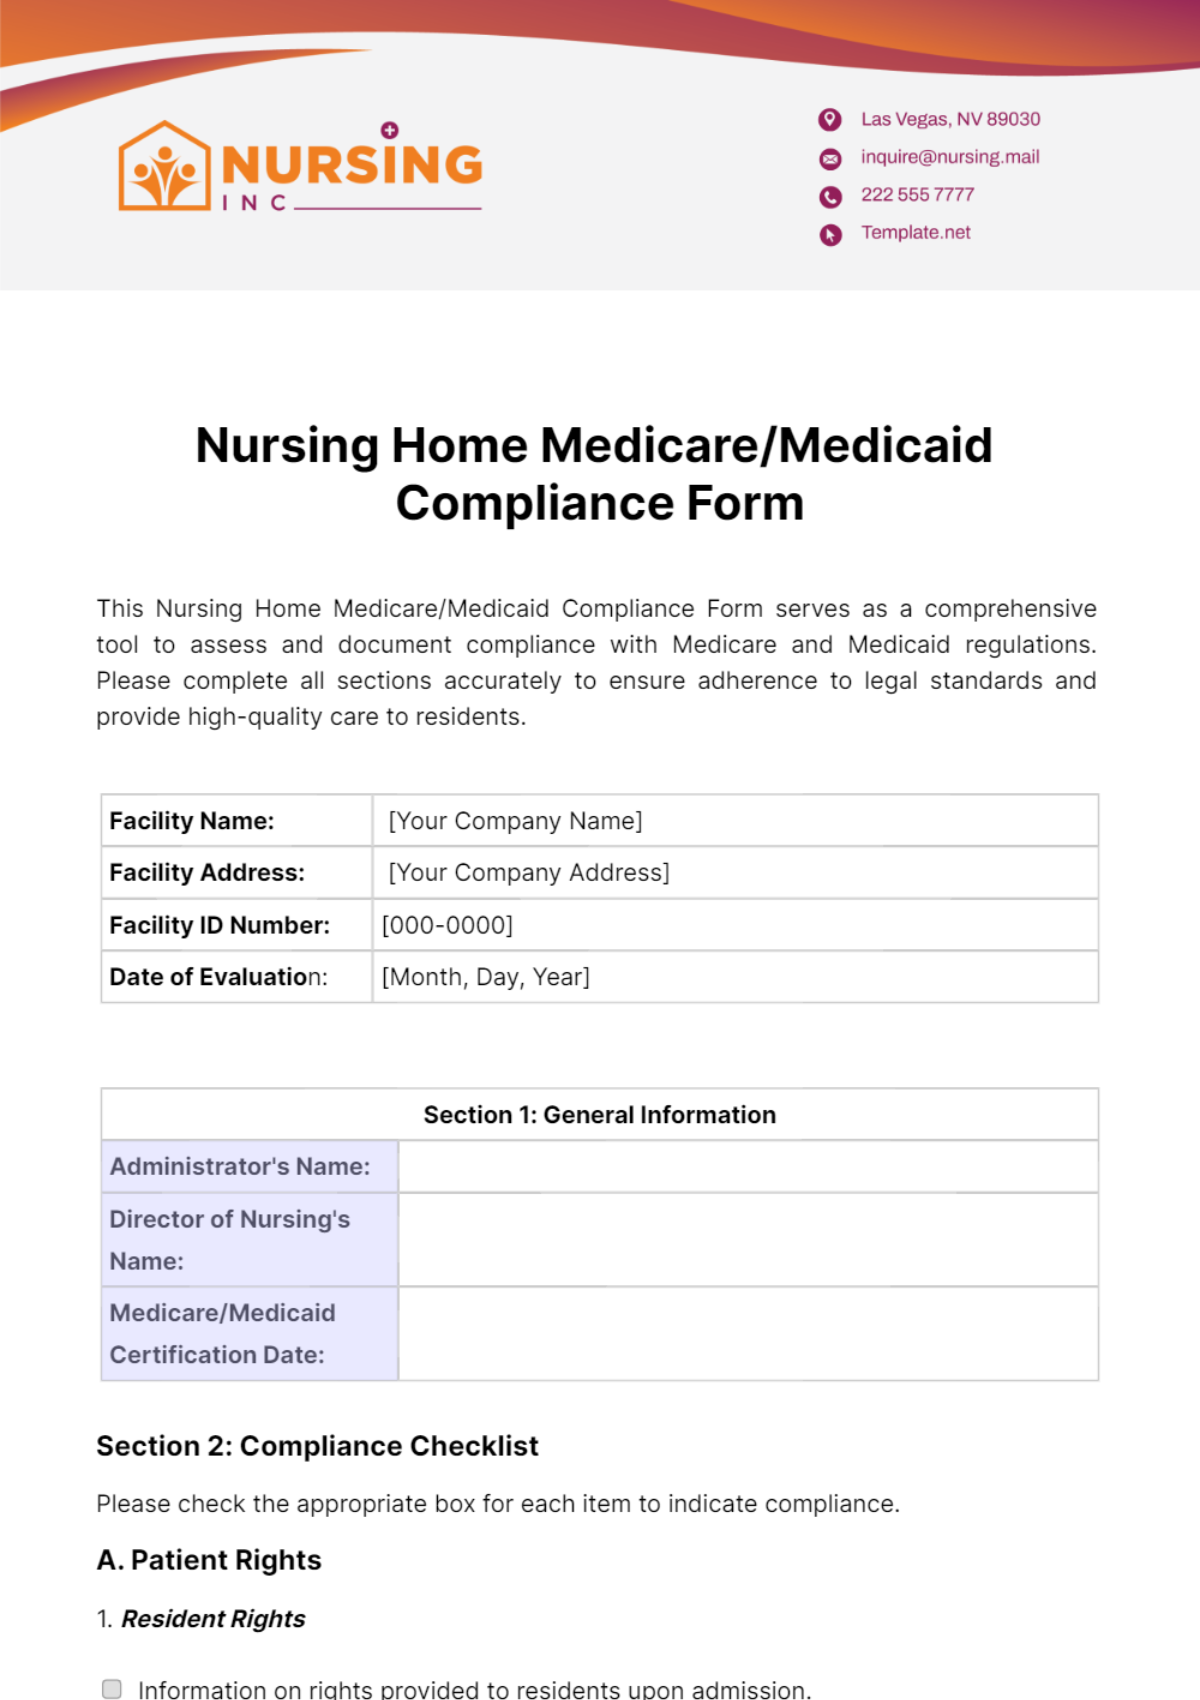 Free Nursing Home Medicare/Medicaid Compliance Form Template